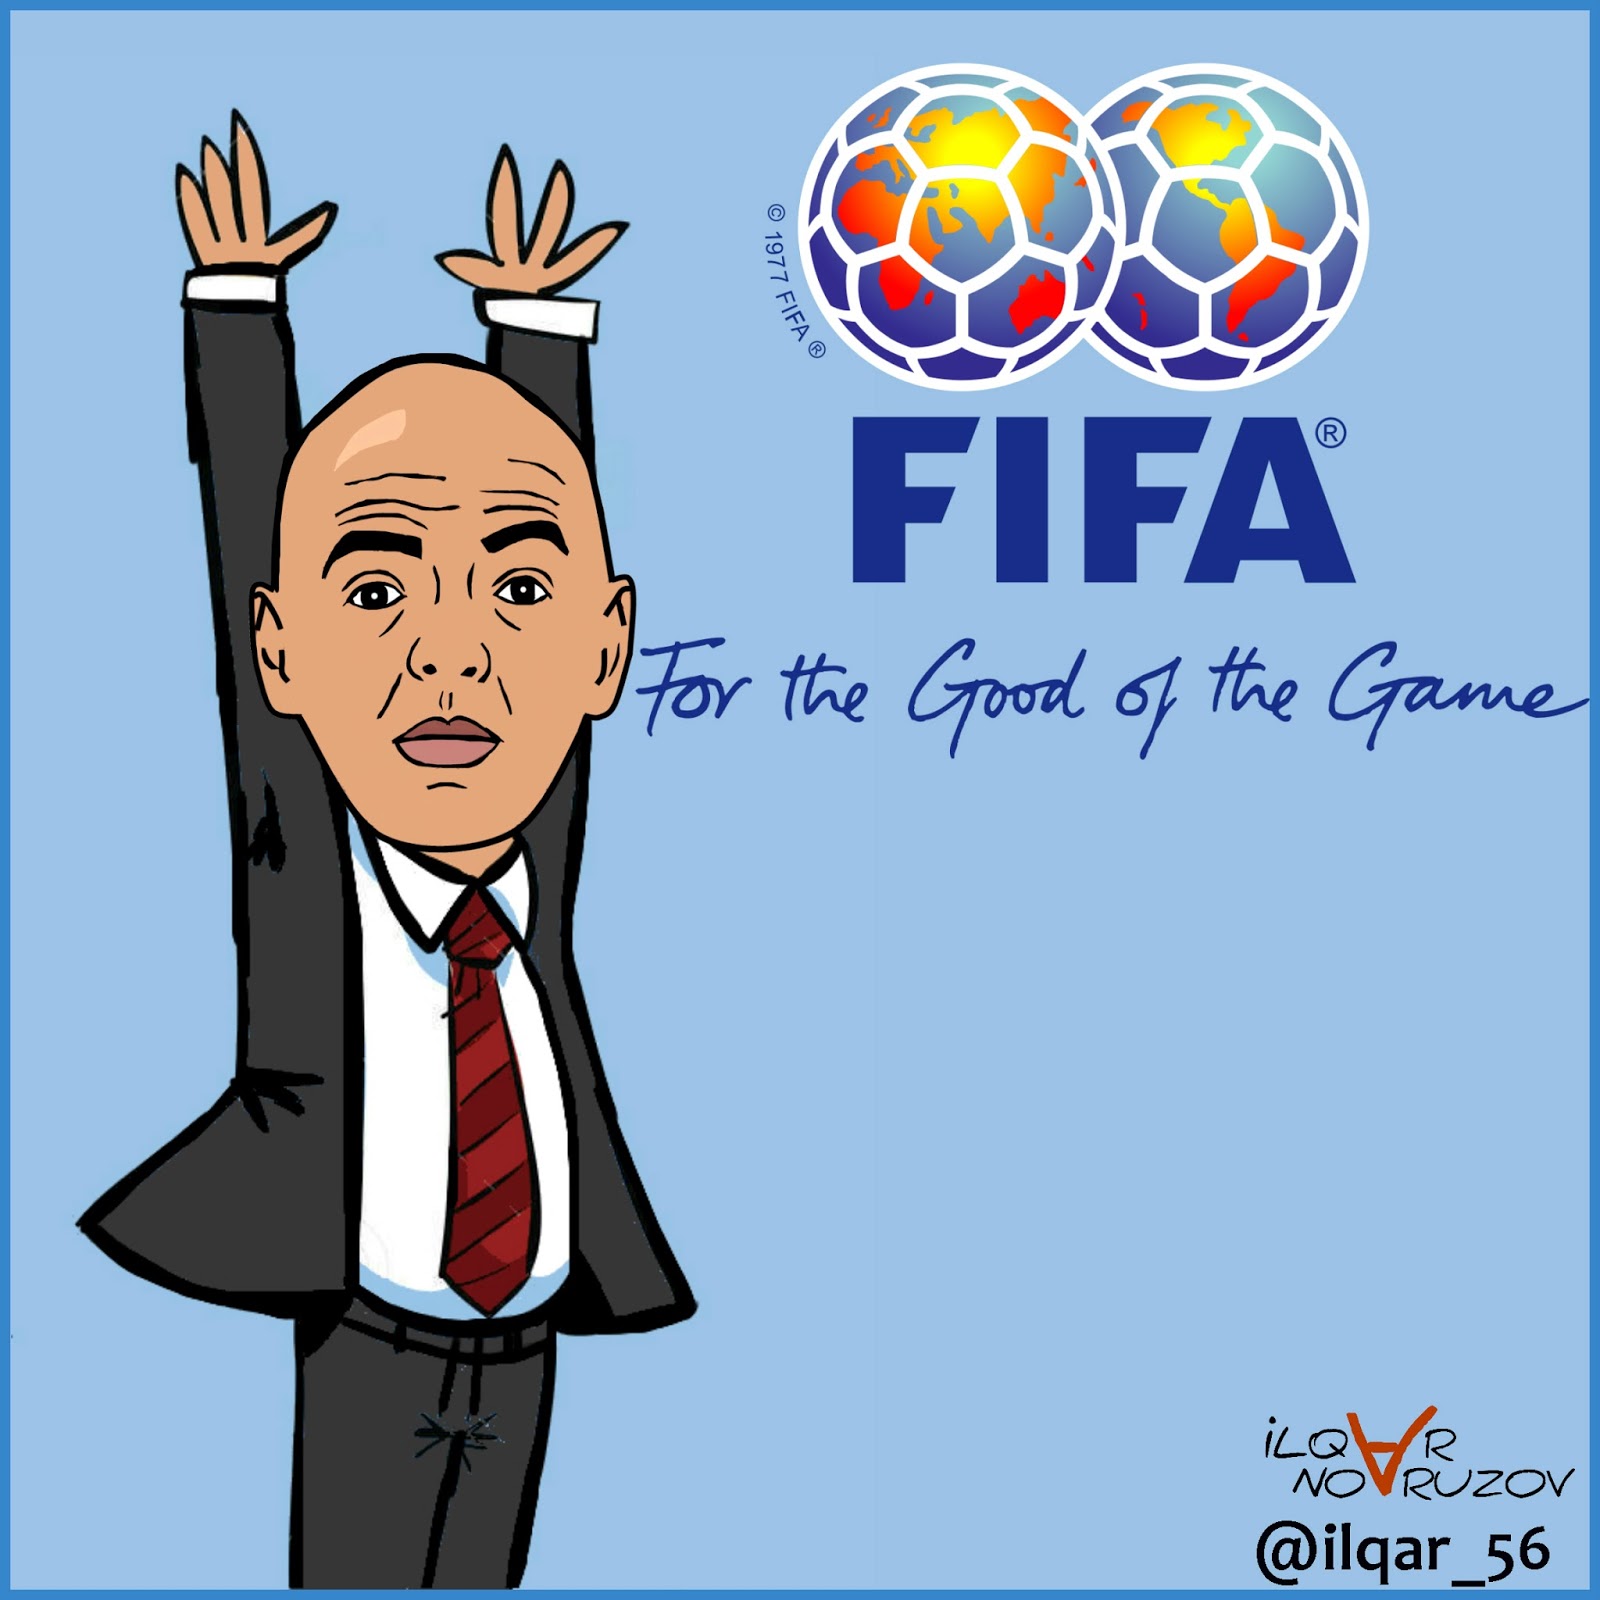 Ilqar Novruzov Cartoon: FIFA President Gianni Infantino Cartoon